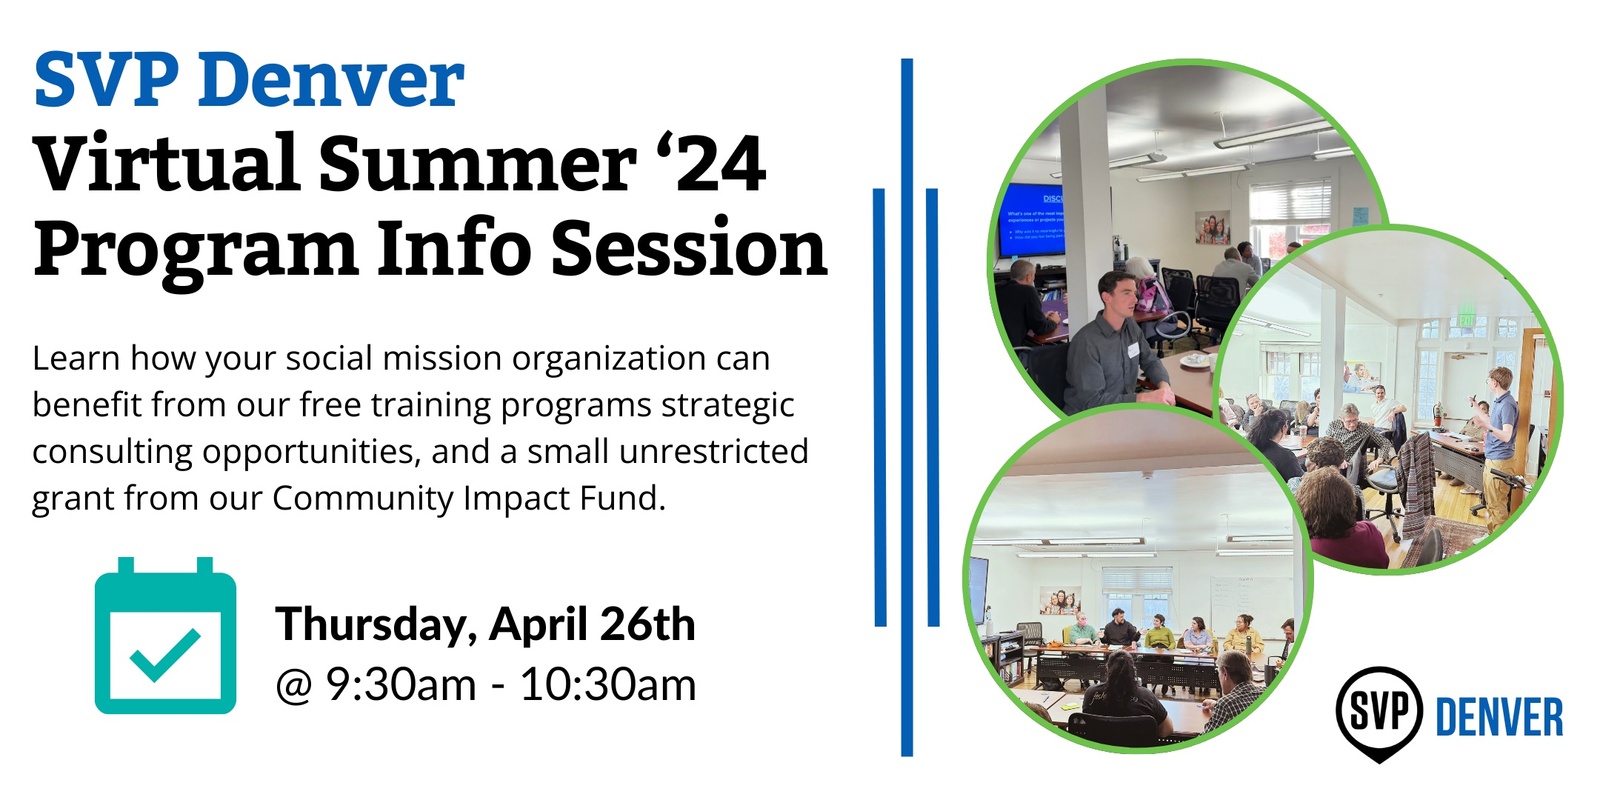 Banner image for SVP Denver Summer '24 Program Info Session